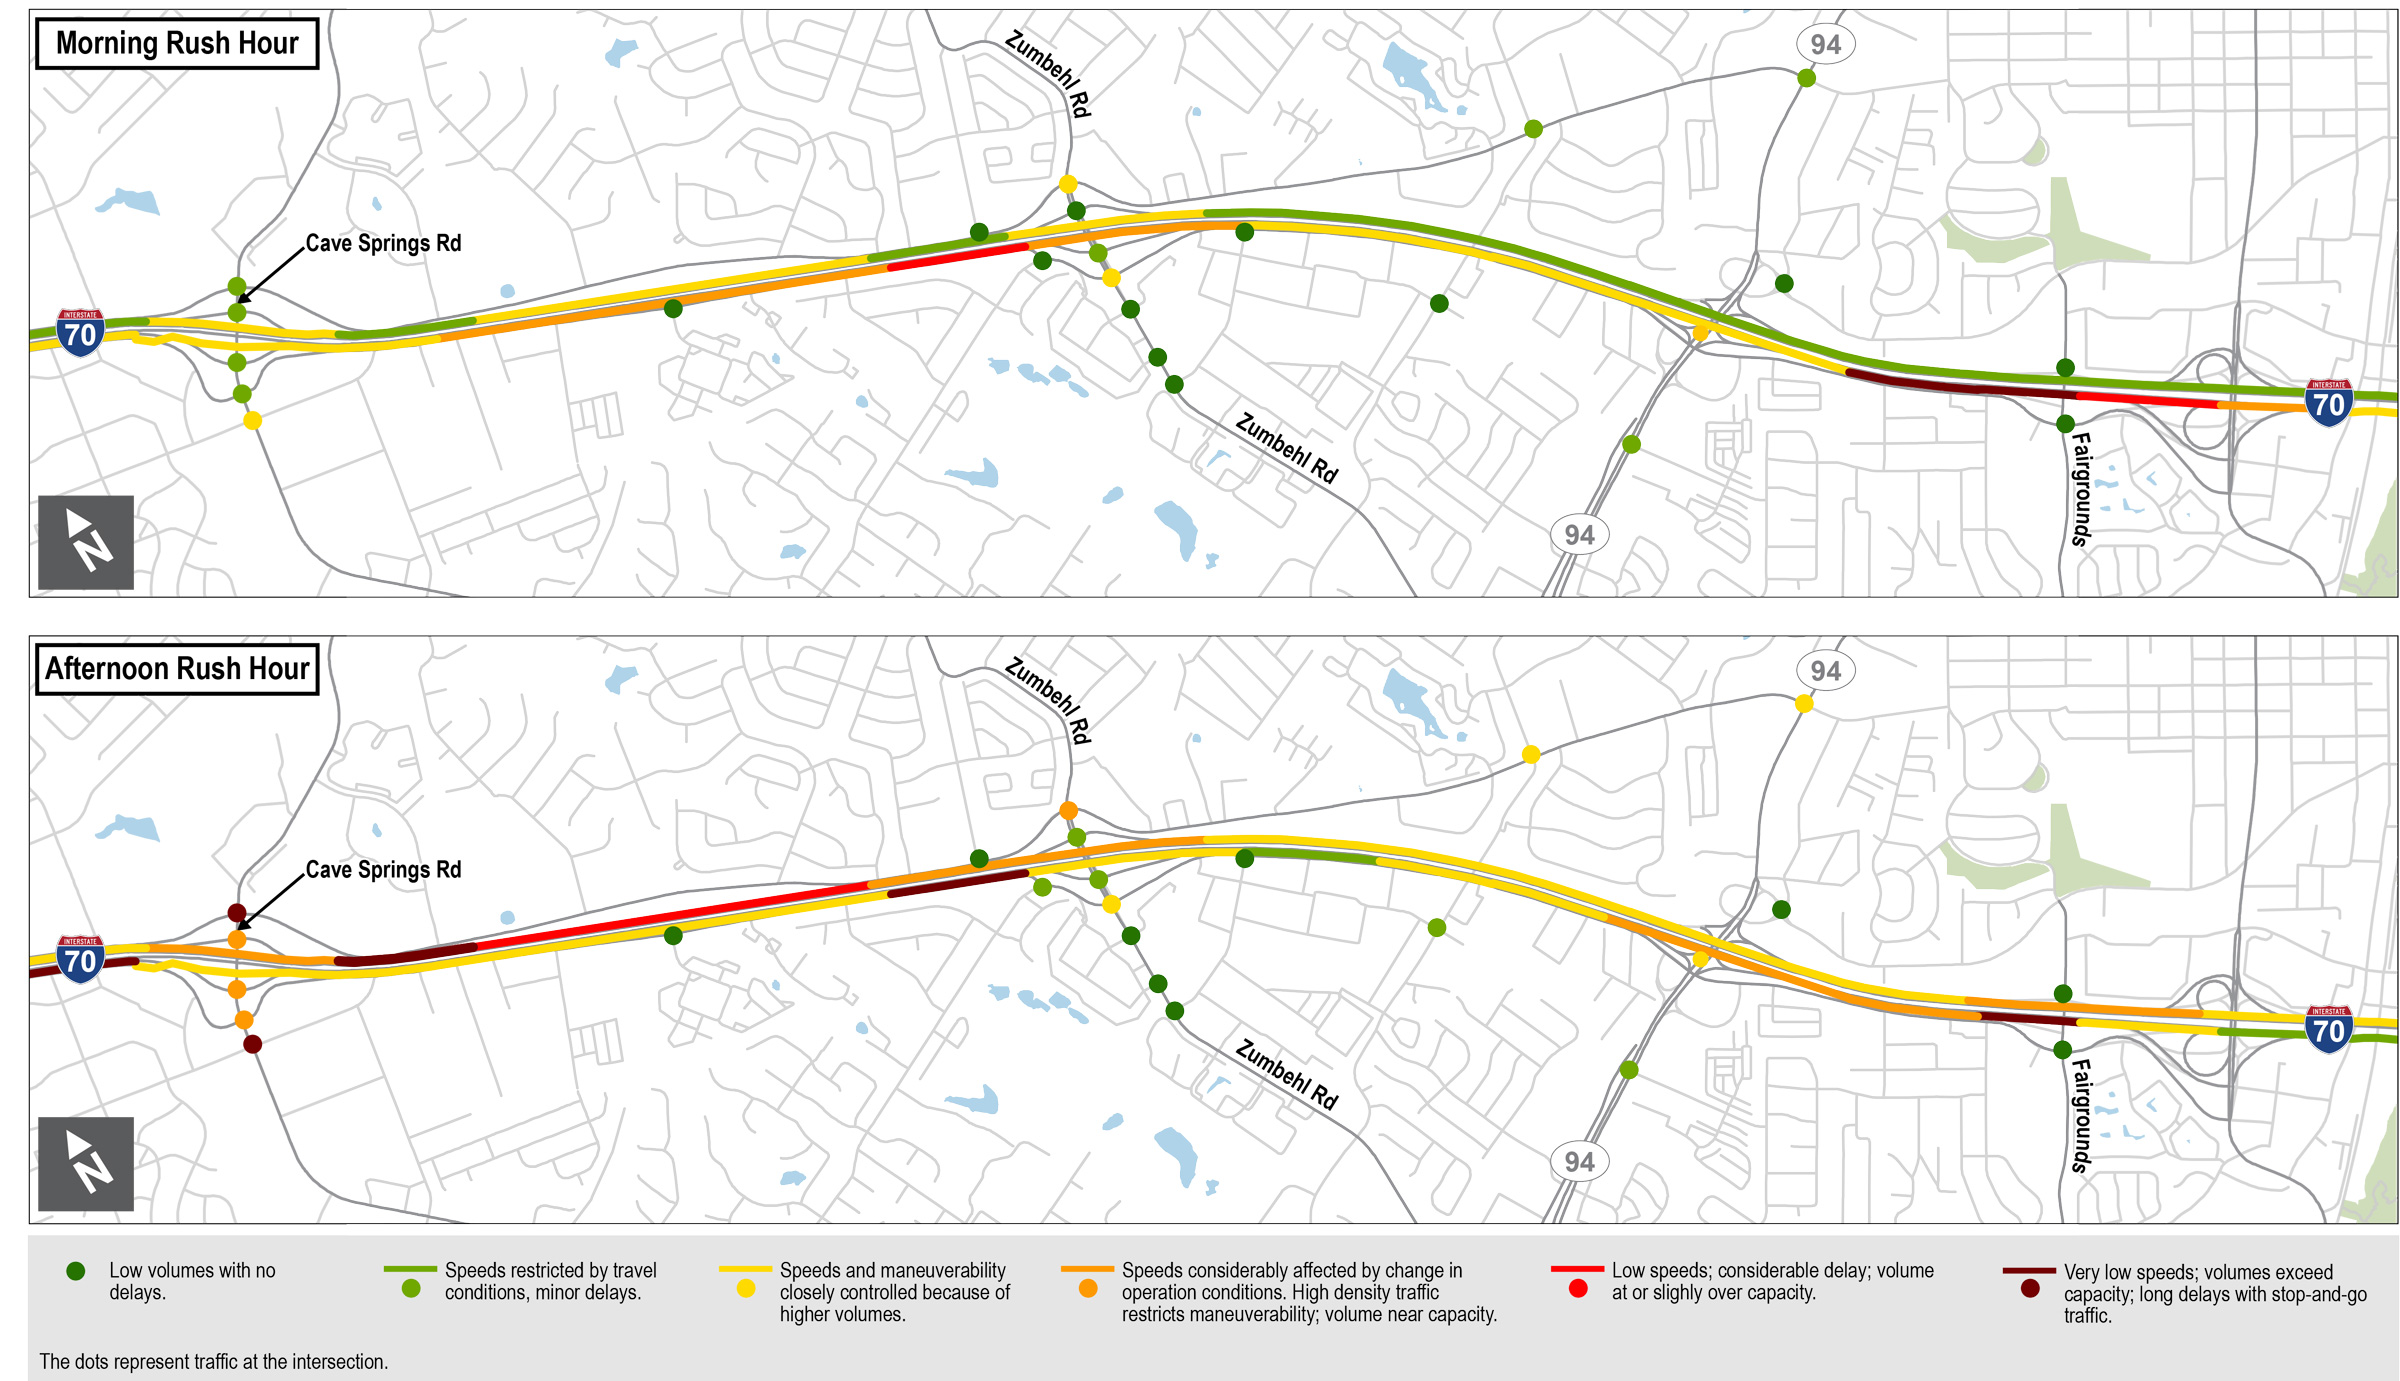 Map showing traffic congestion hotspots